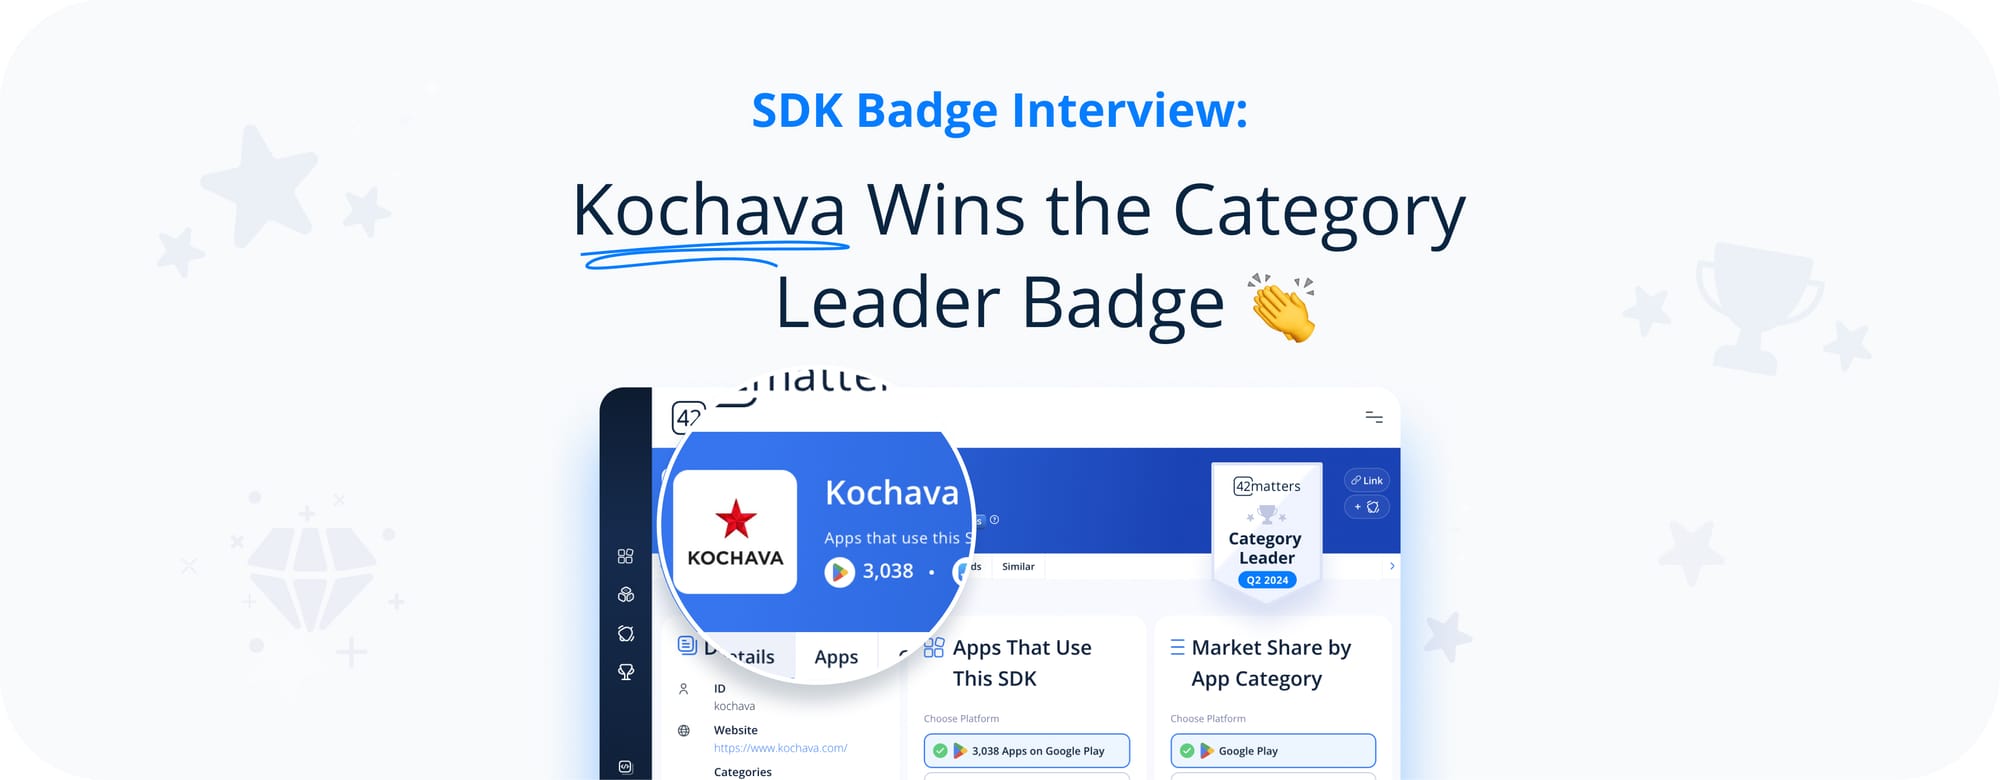 SDK Badge Interview: Kochava Wins the Category Leader Badge